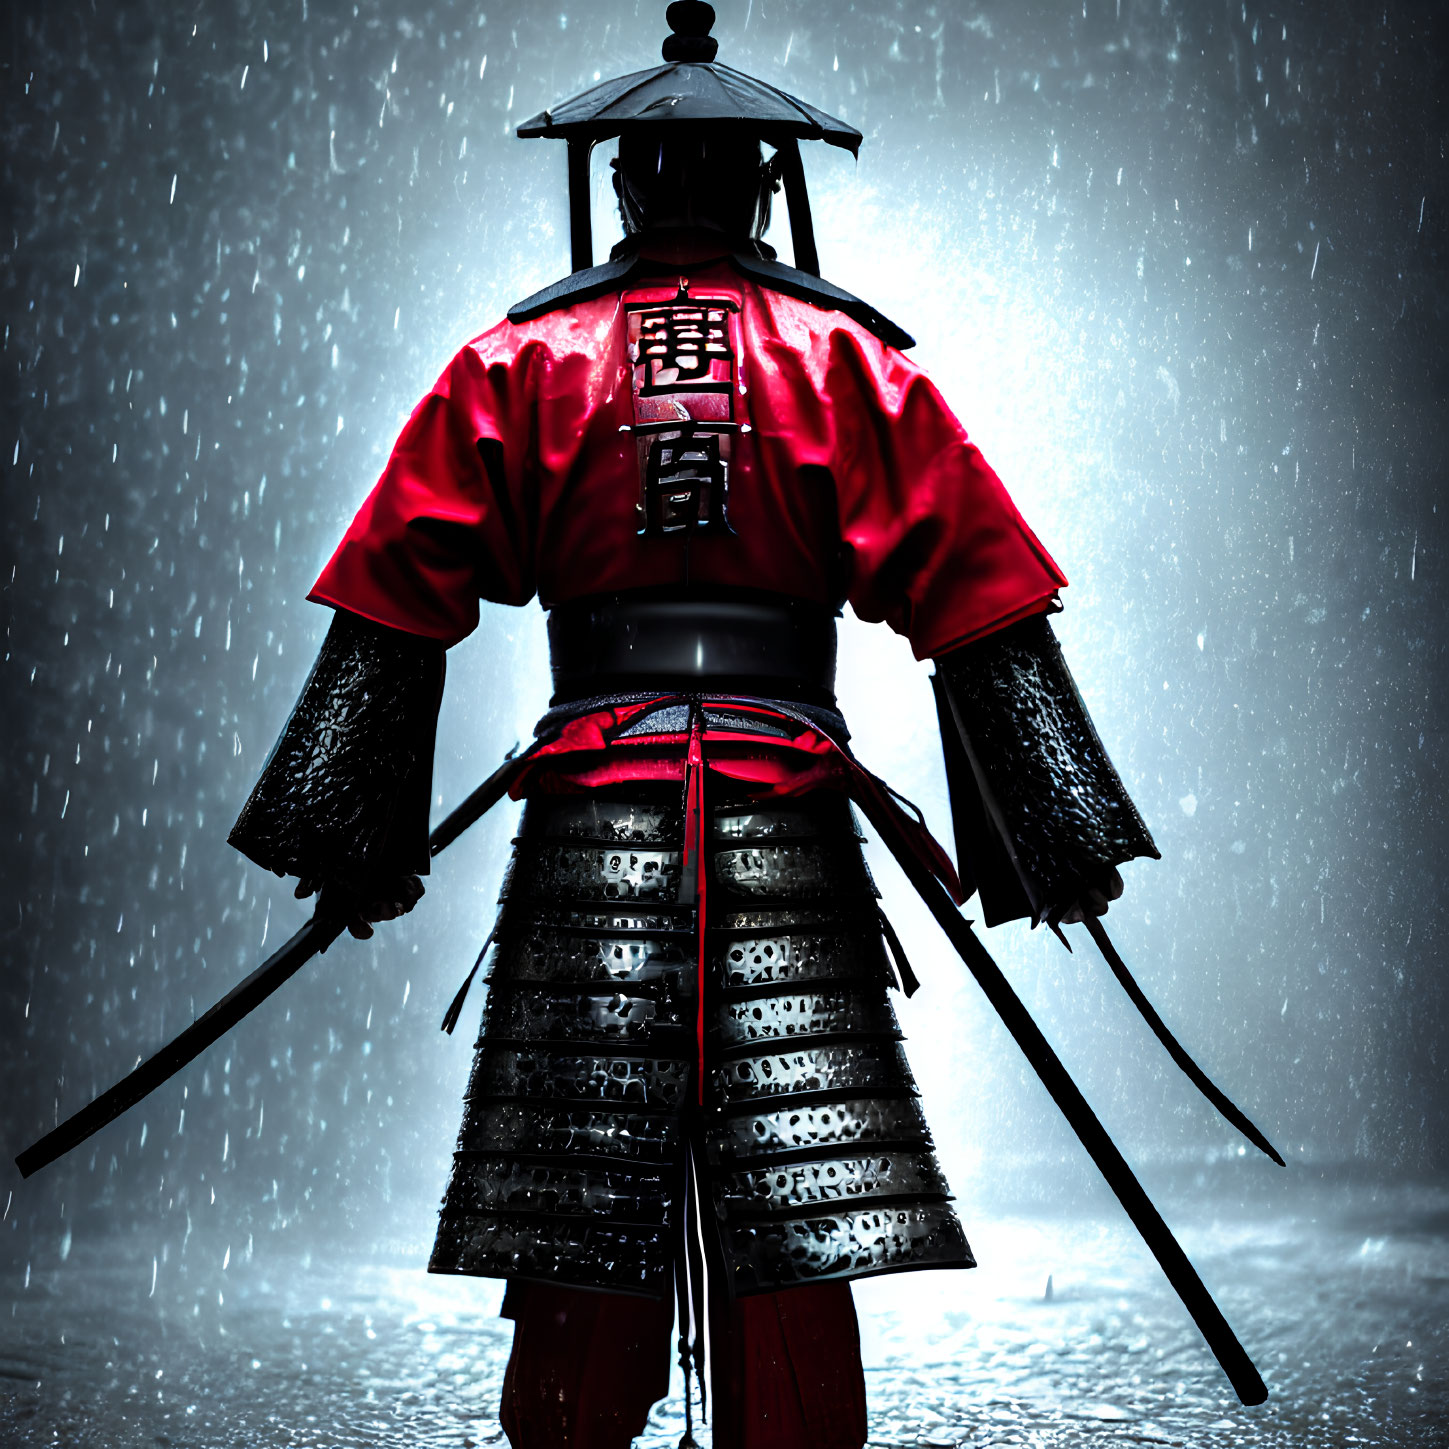 Traditional Samurai Armor Figure Standing in Night Rain